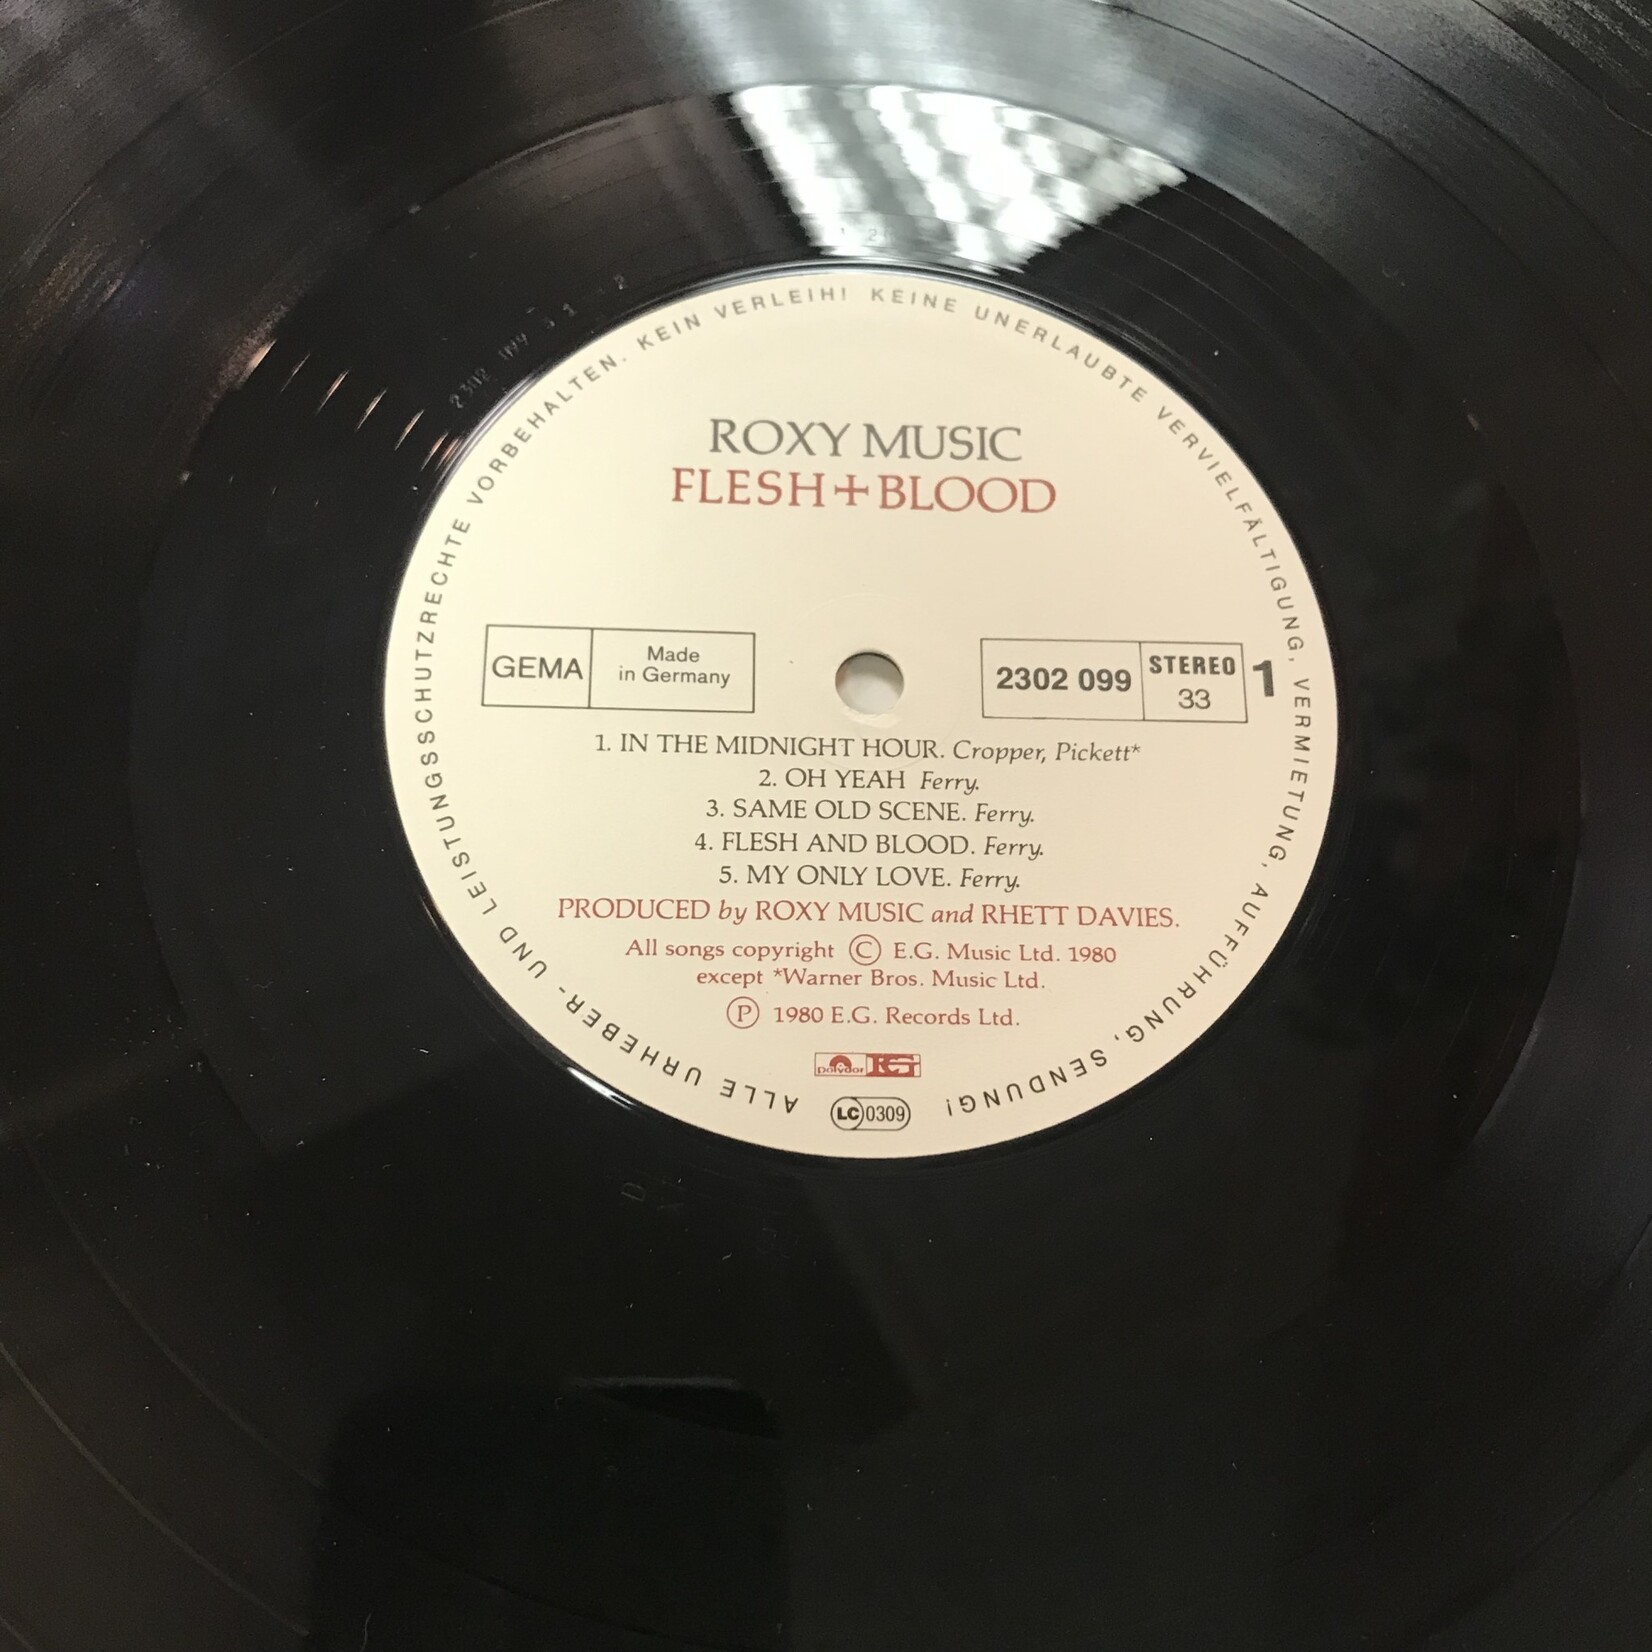 Roxy Music - Flesh & Blood - 2303 099 - Vinyl LP (USED - GER)